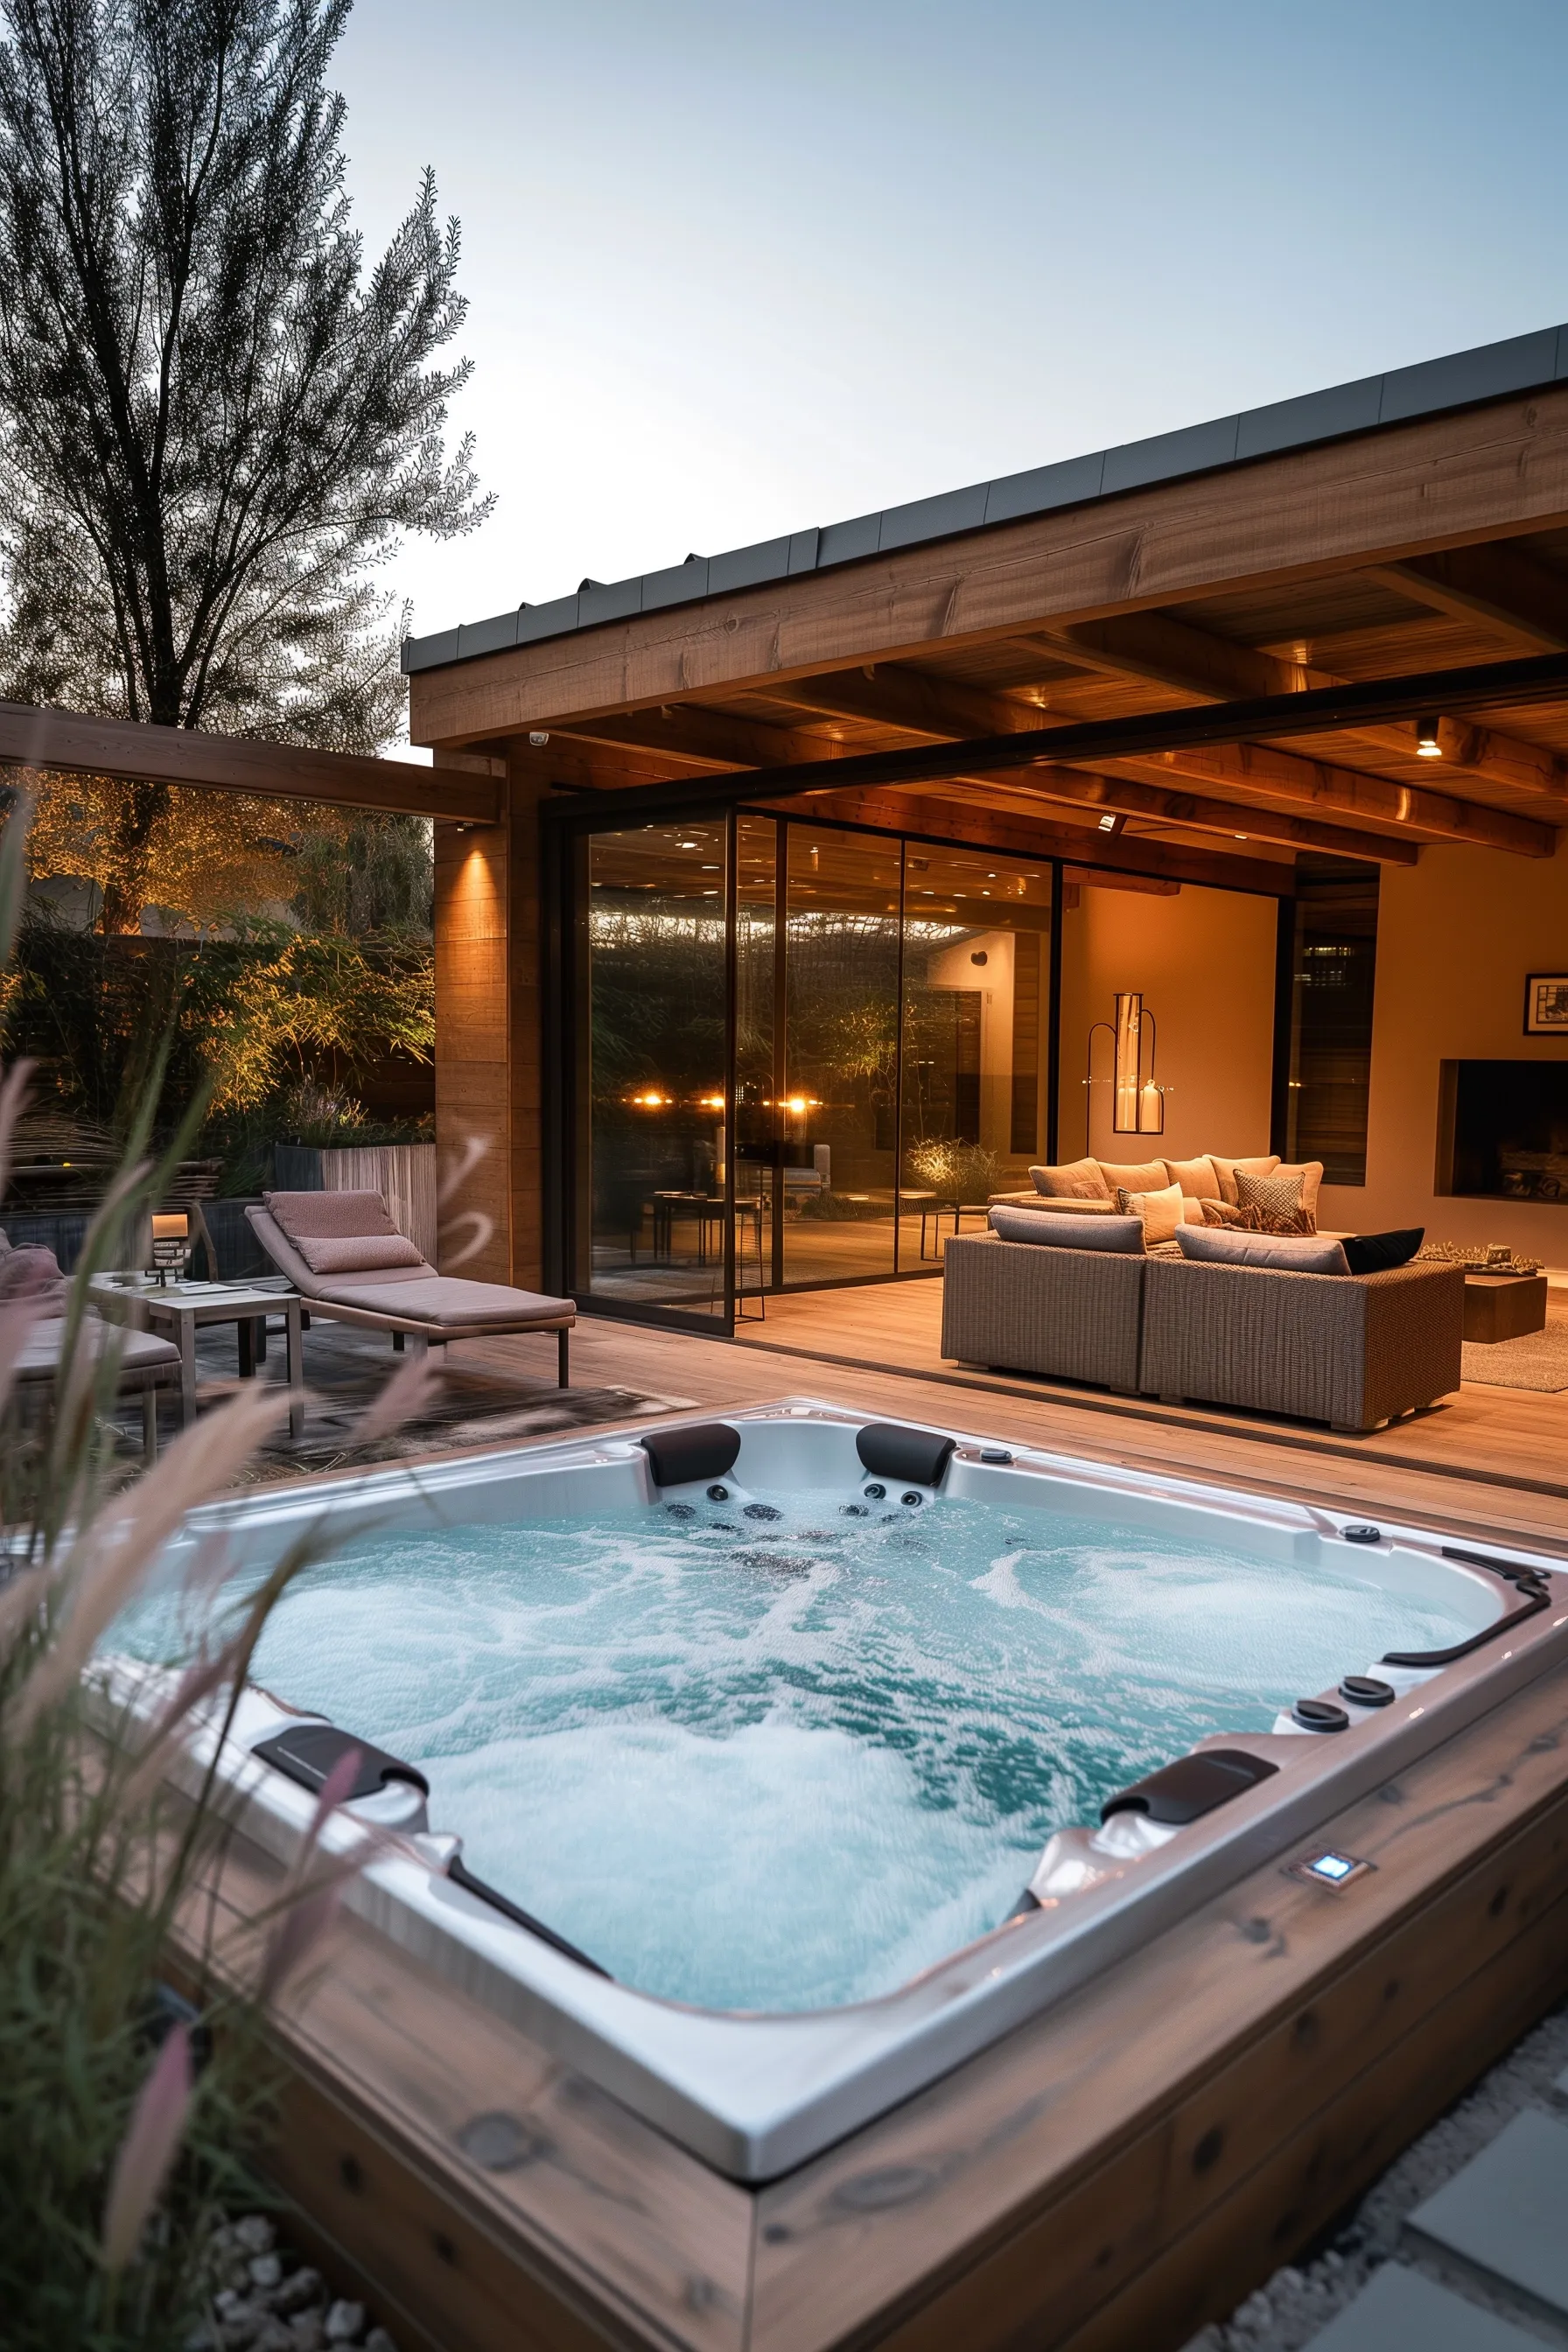 An outdoor hot tub